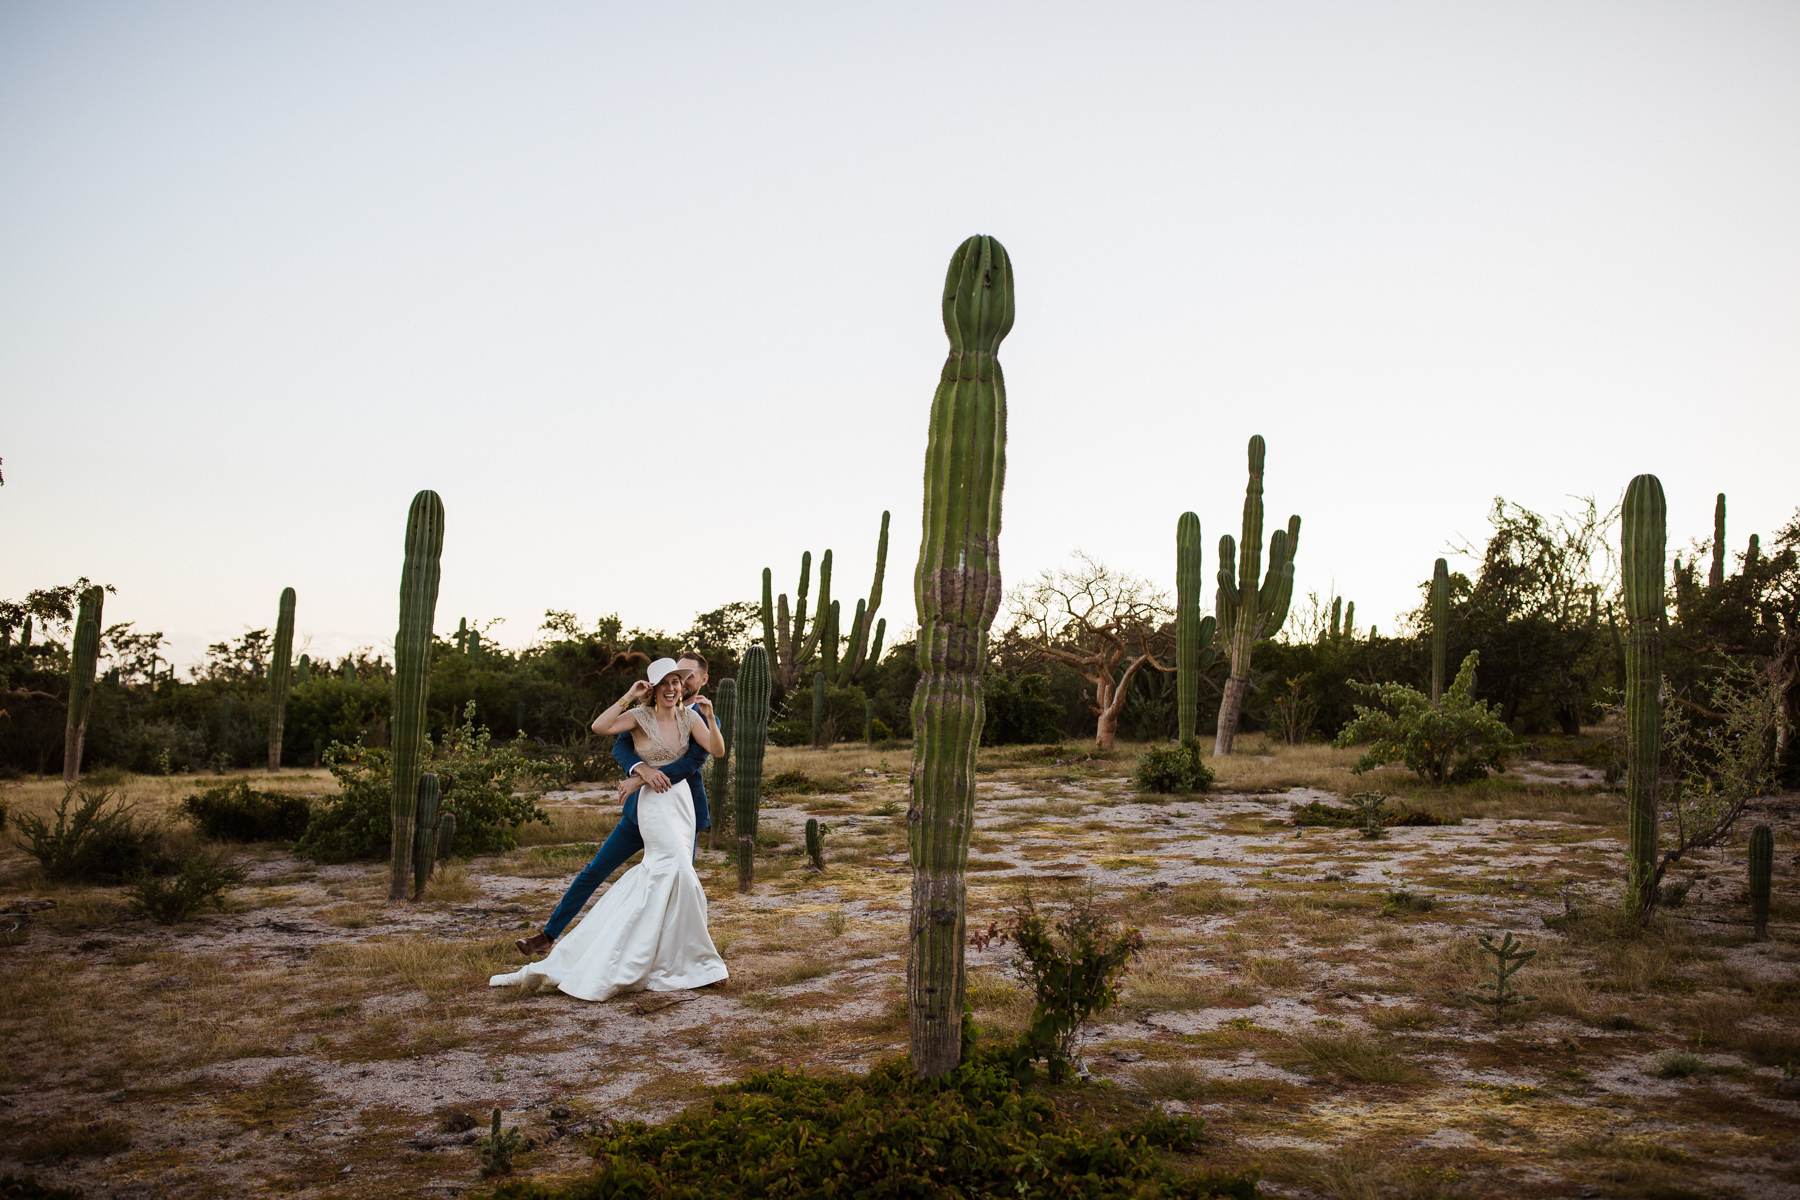 Cabo wedding photographers for a La Ventana Destination Elopement - Image 58